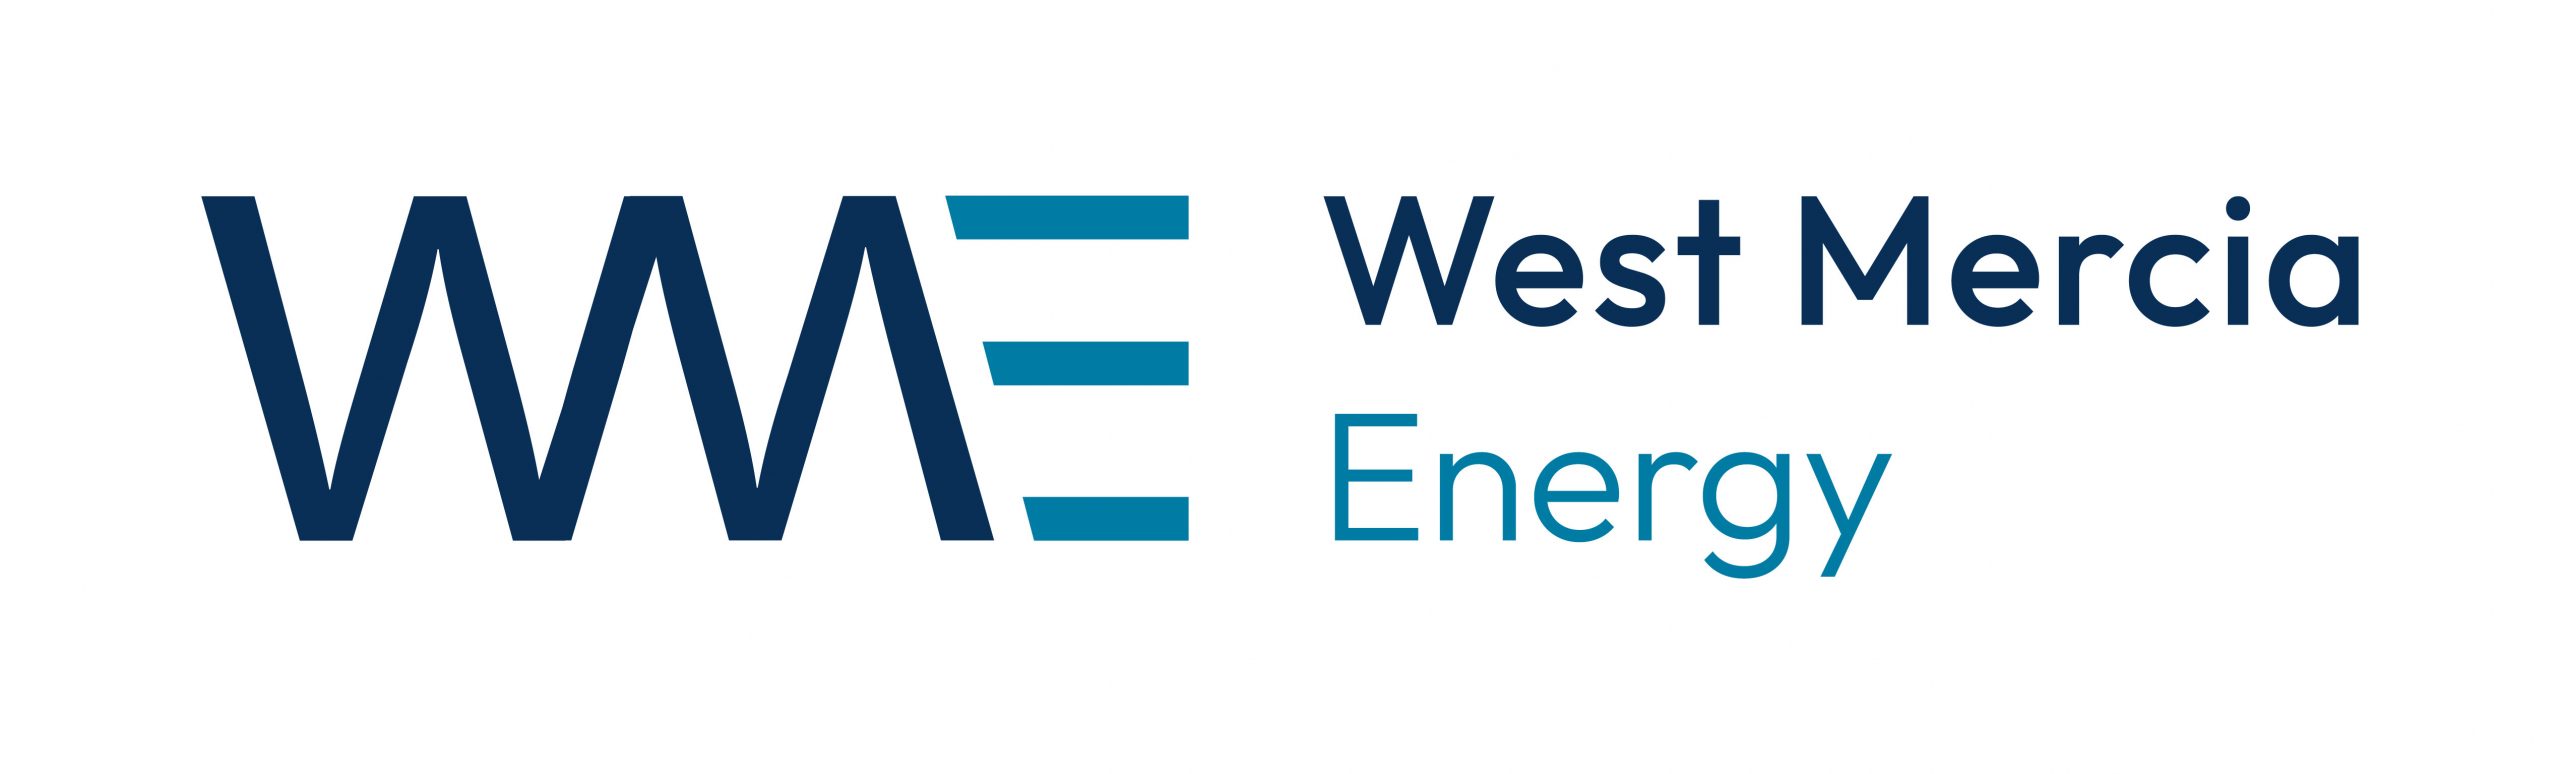 West Mercia Energy